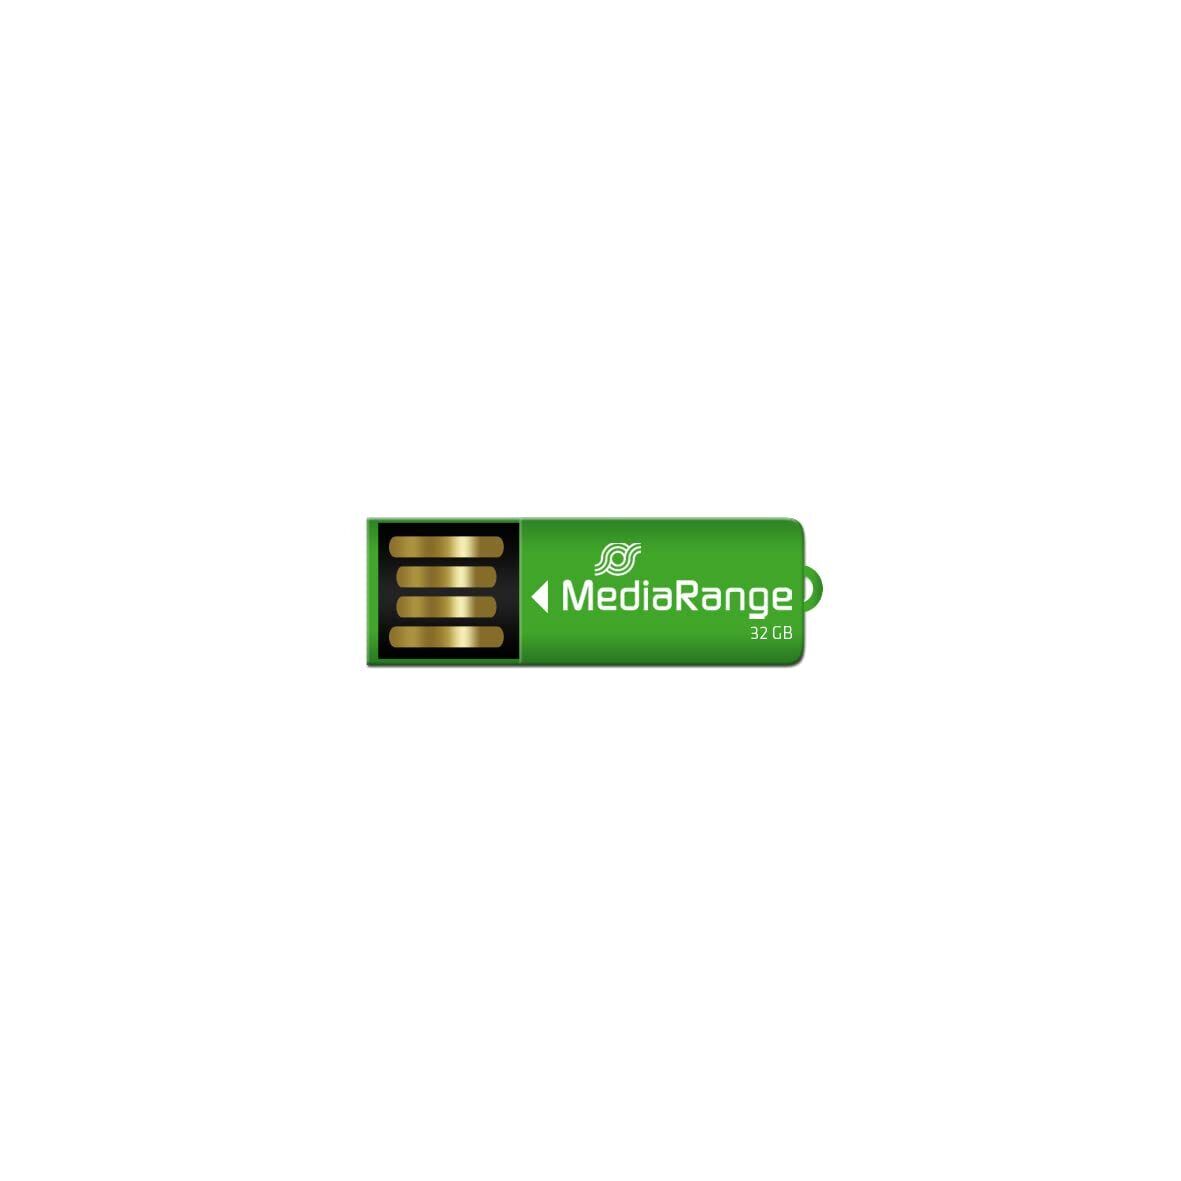 MediaRange MR977 Nano USB Stick 32GB green with paper clip function 32 GB